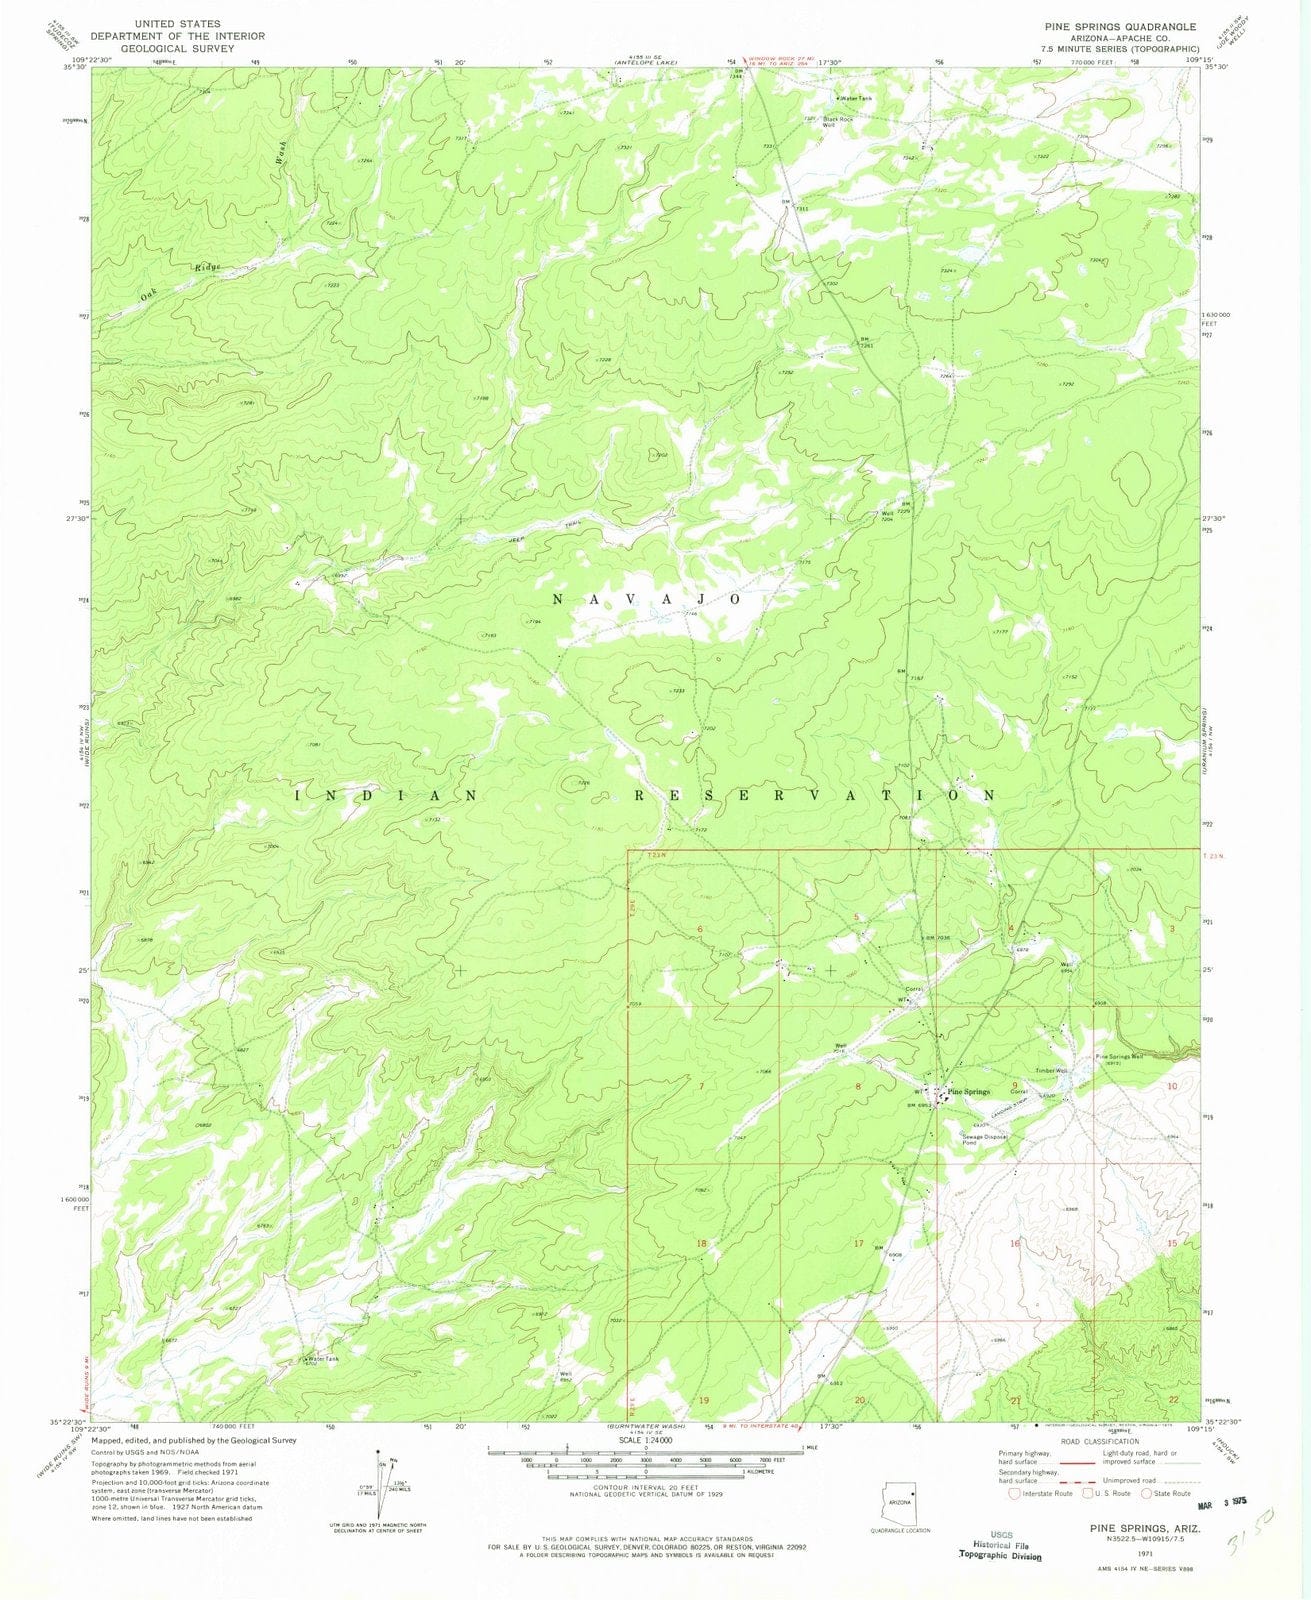 1971 Pine Springs, AZ - Arizona - USGS Topographic Map